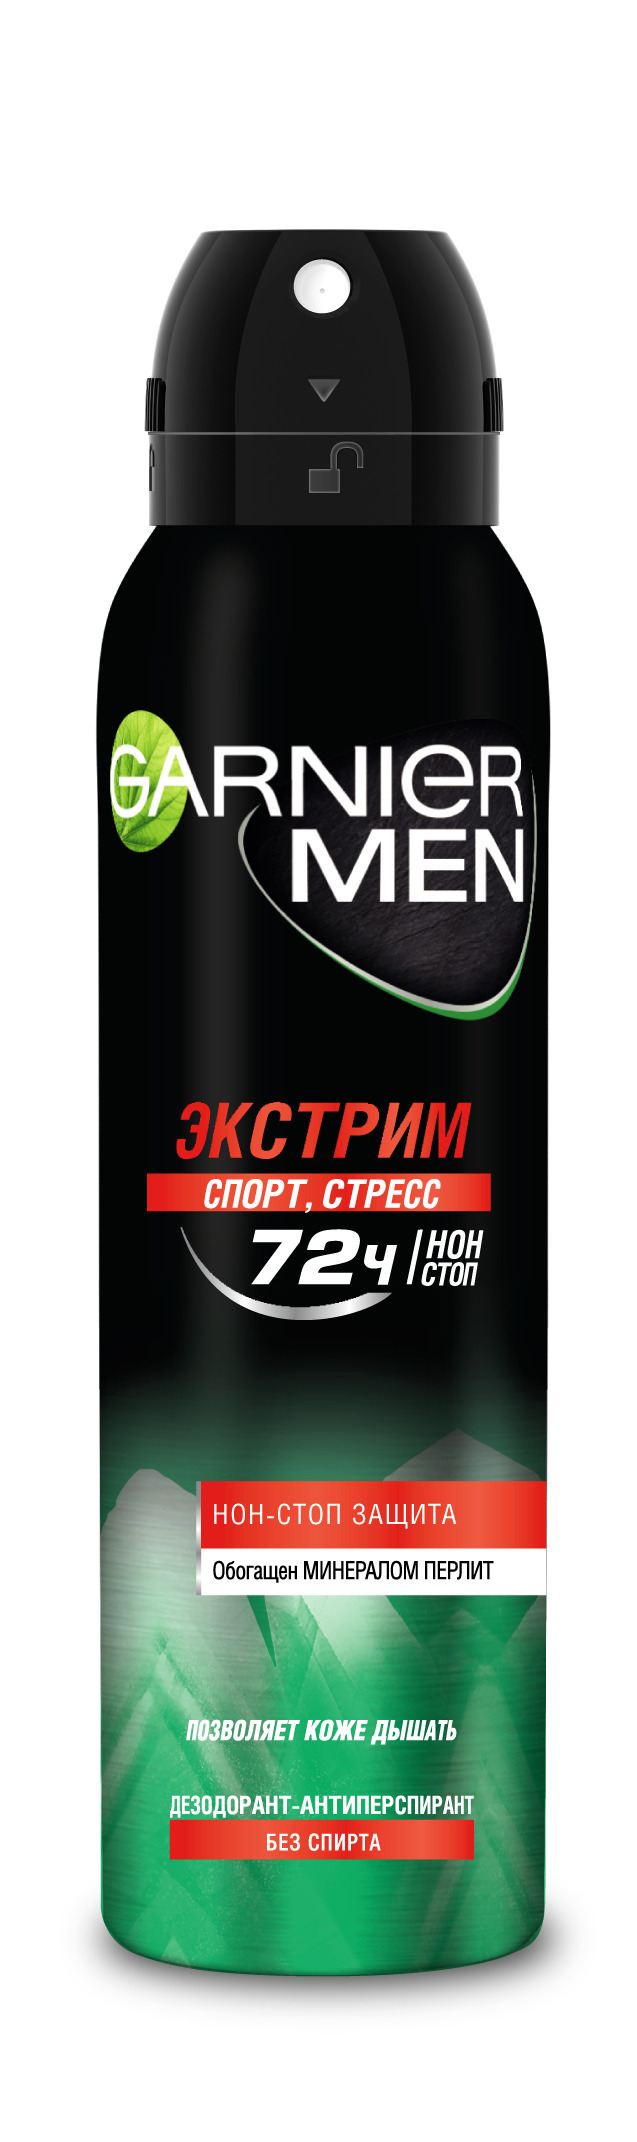 Garnier дезодорант мужской